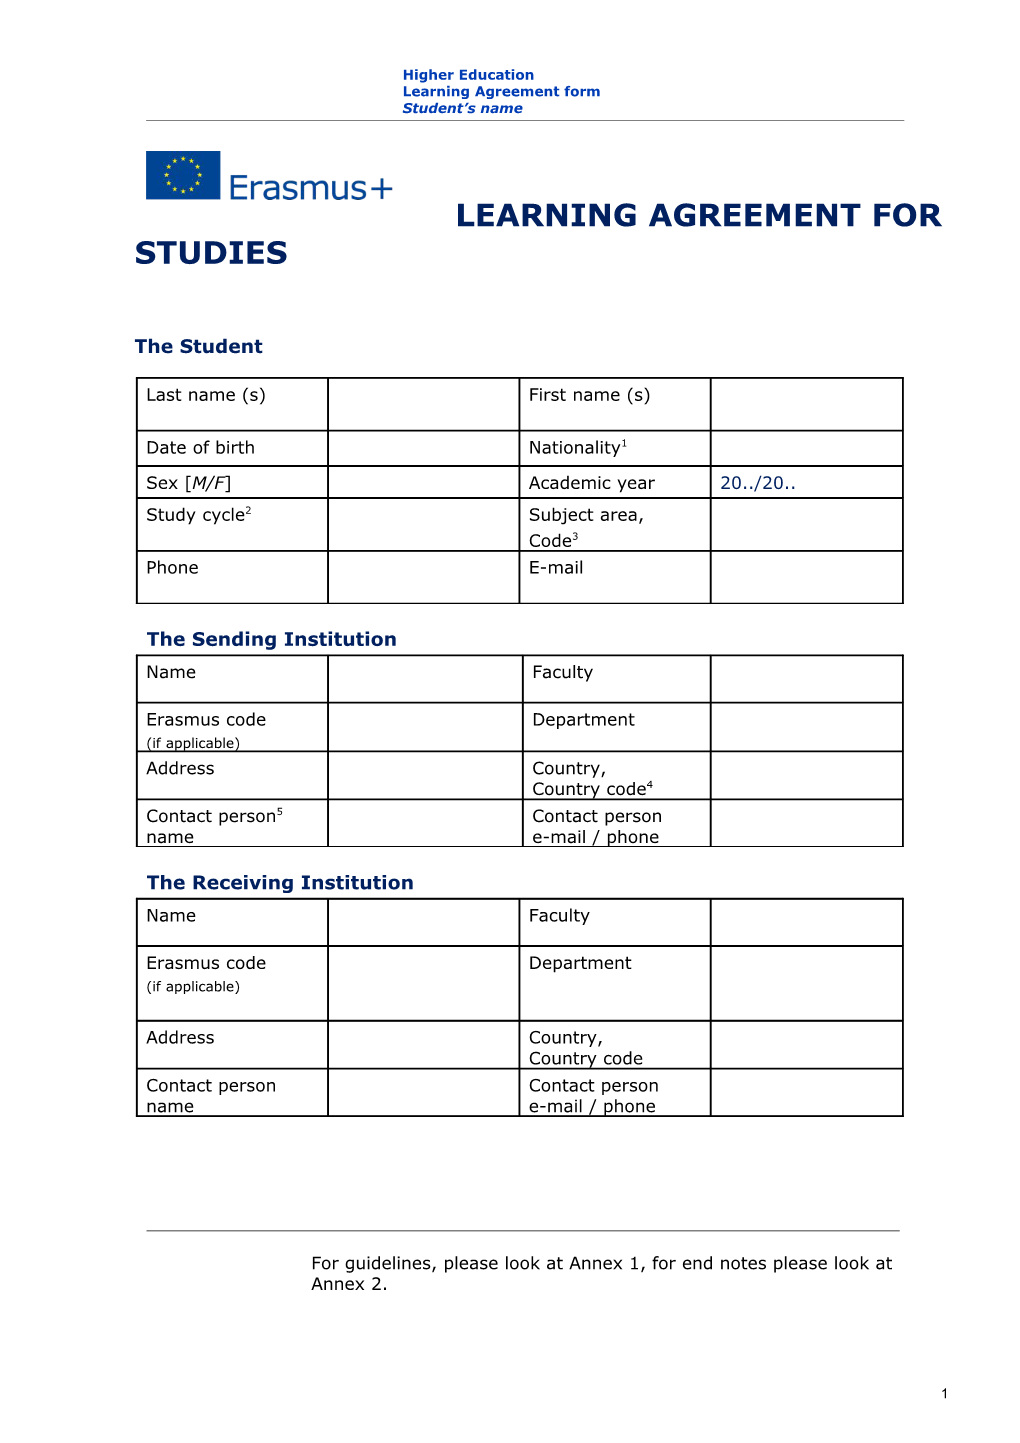 Learning Agreement for Studies s1